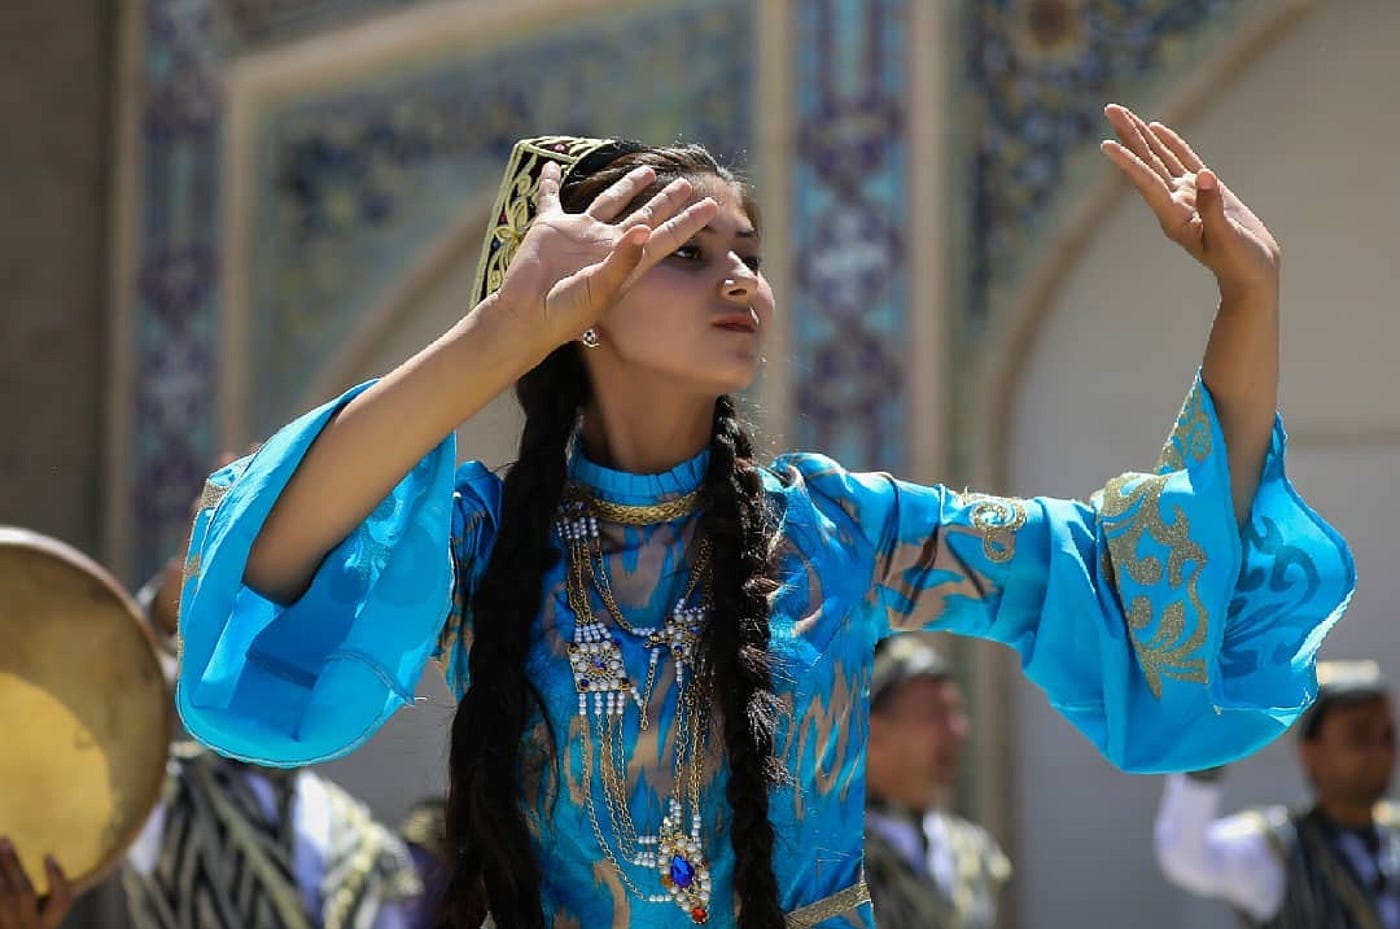 Donne Uzbekistan. DONNE UZBEKISTAN | by Via della Seta | Medium